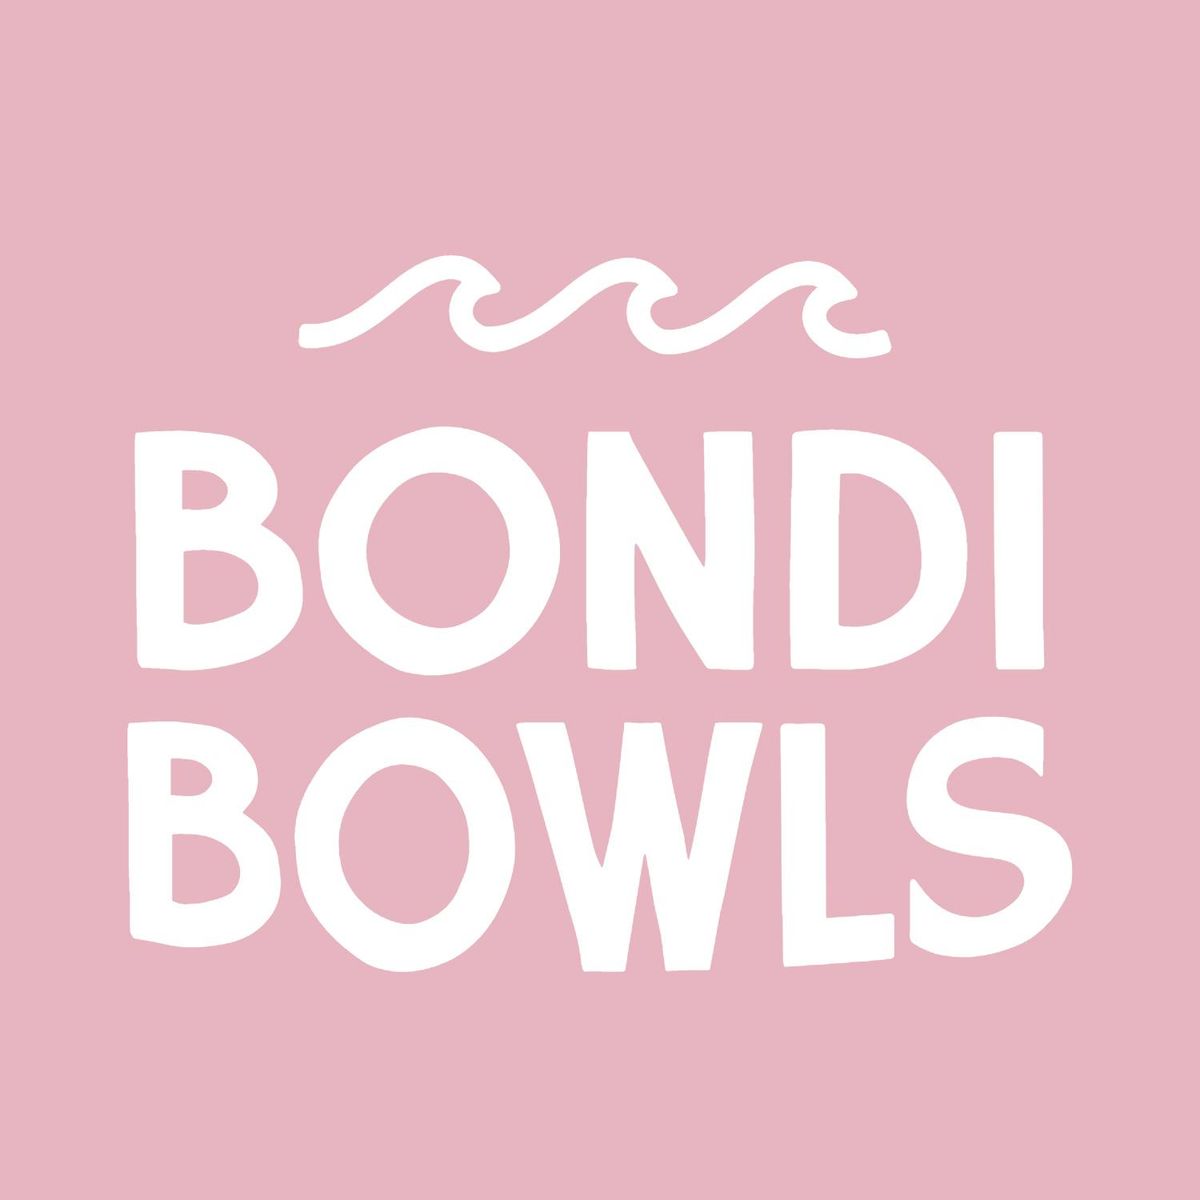 Bondi Bowls is BACK!